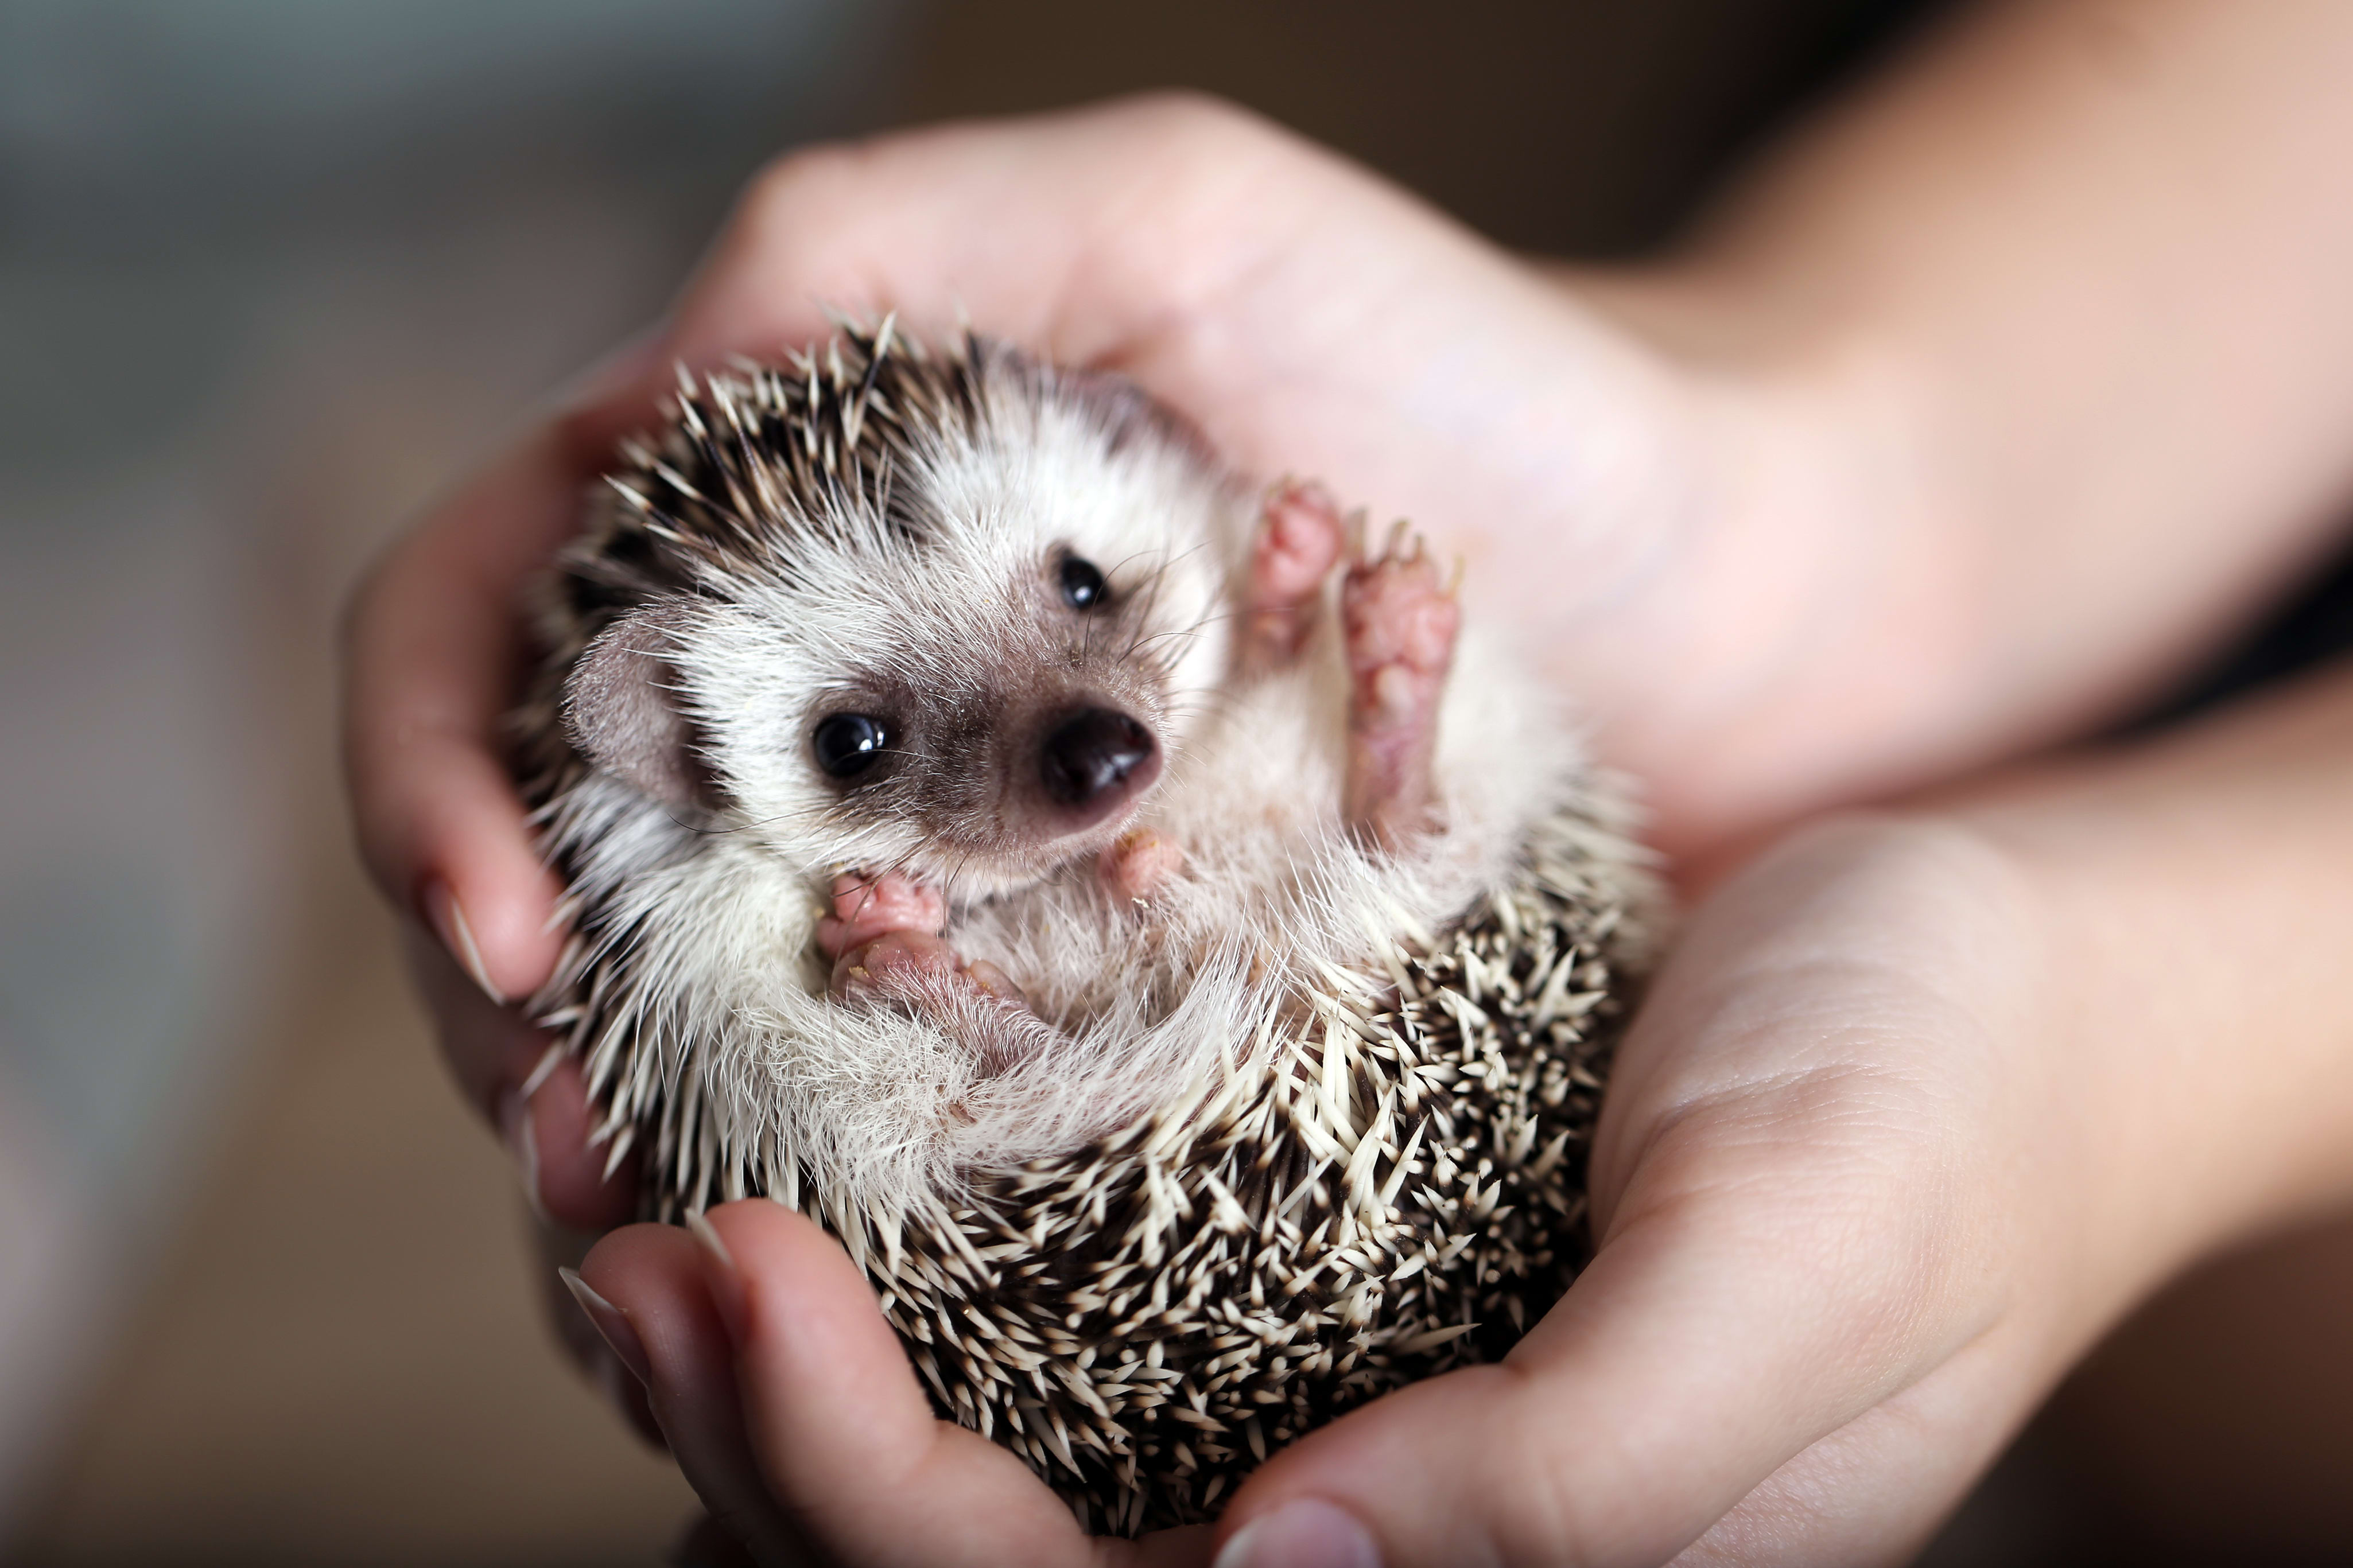 hands holding a hedgehog